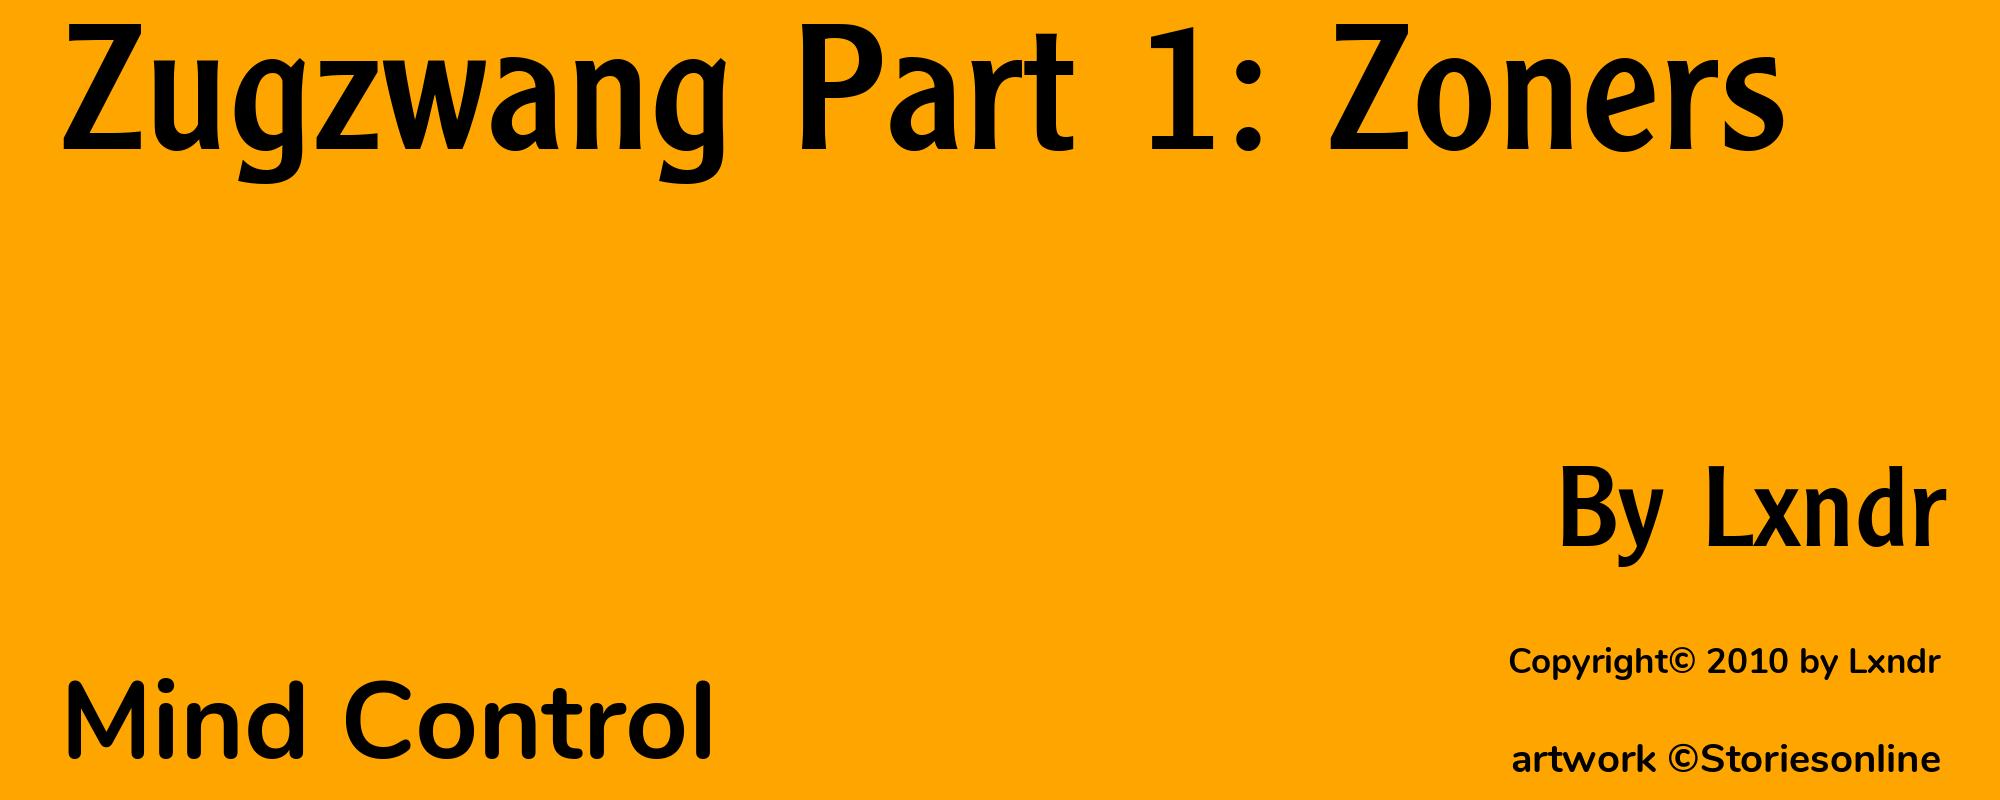 Zugzwang Part 1: Zoners - Cover